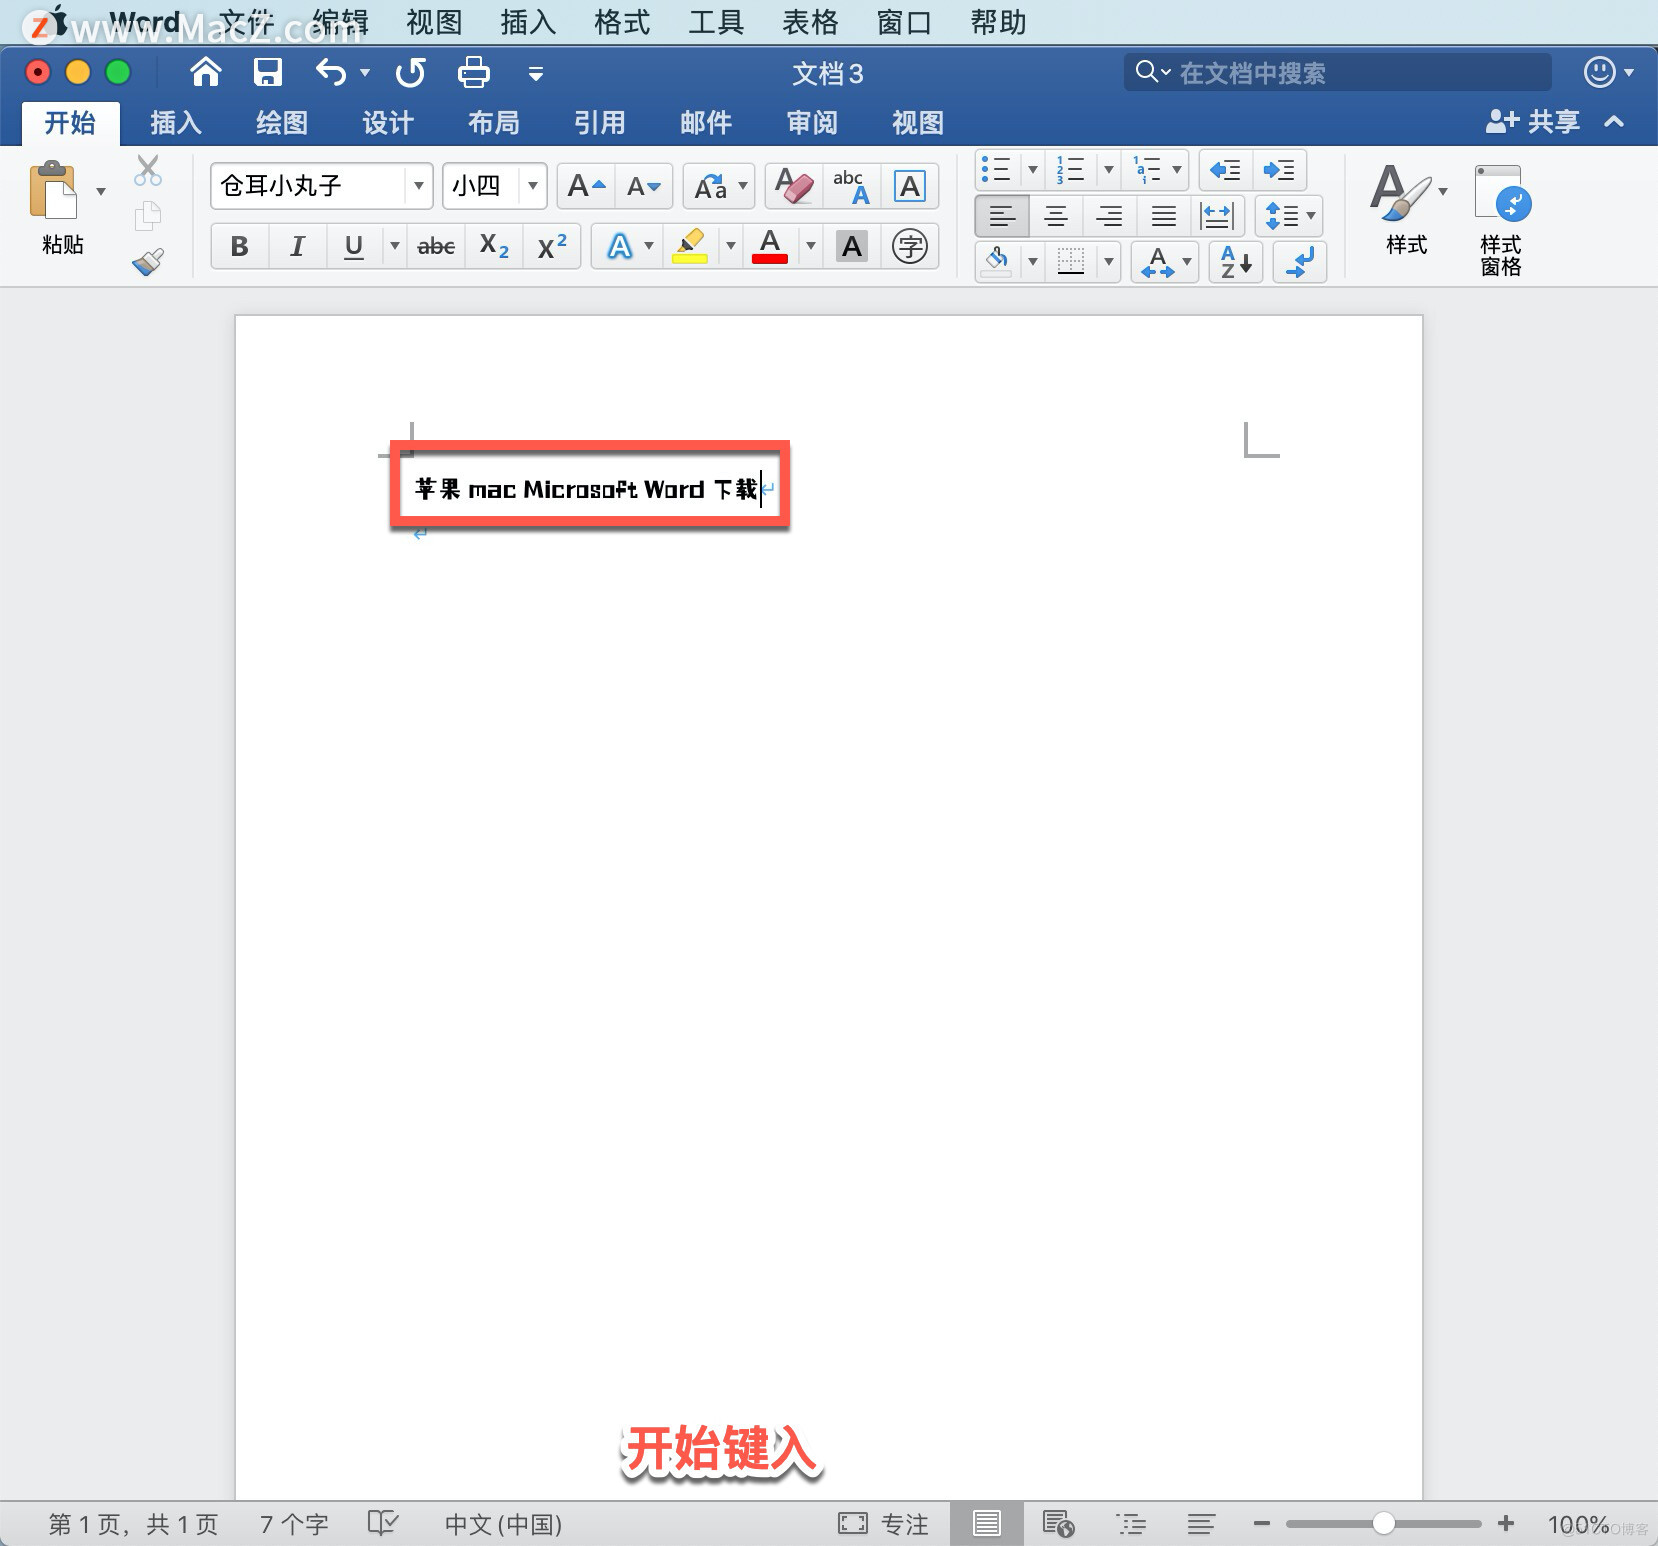 Microsoft Word教程「1」，如何在 Word 中创建文档、添加和编辑文本？_字体颜色_02